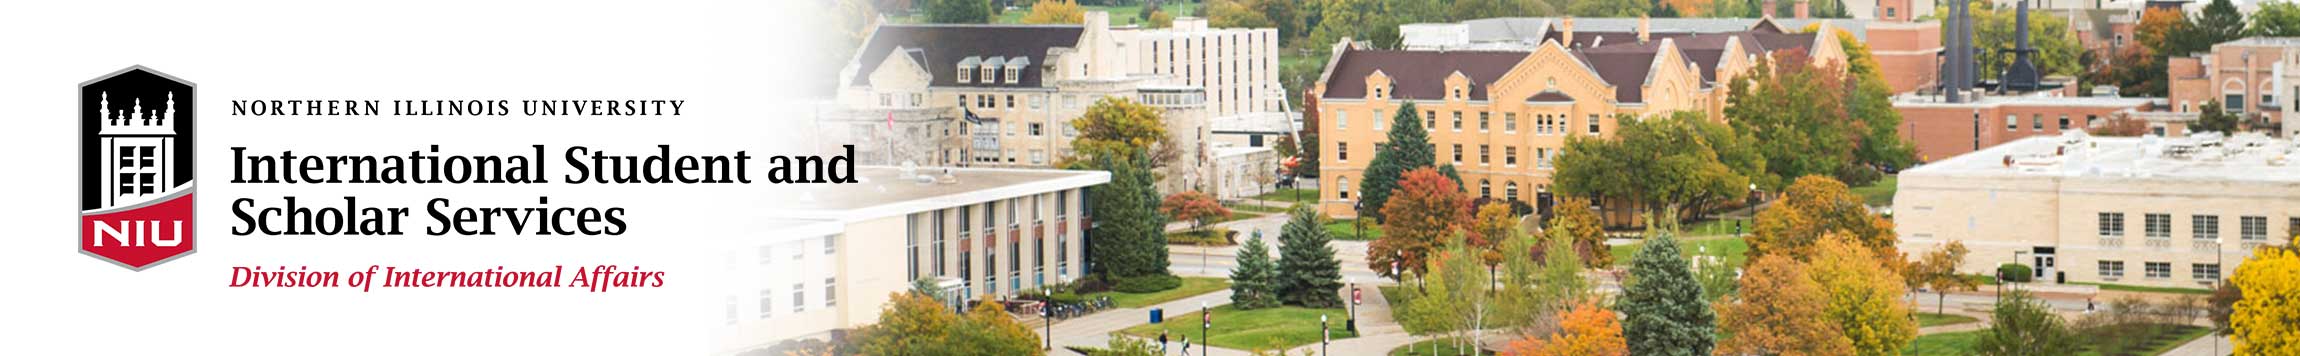 International Student and Scholar Services - Northern Illinois University